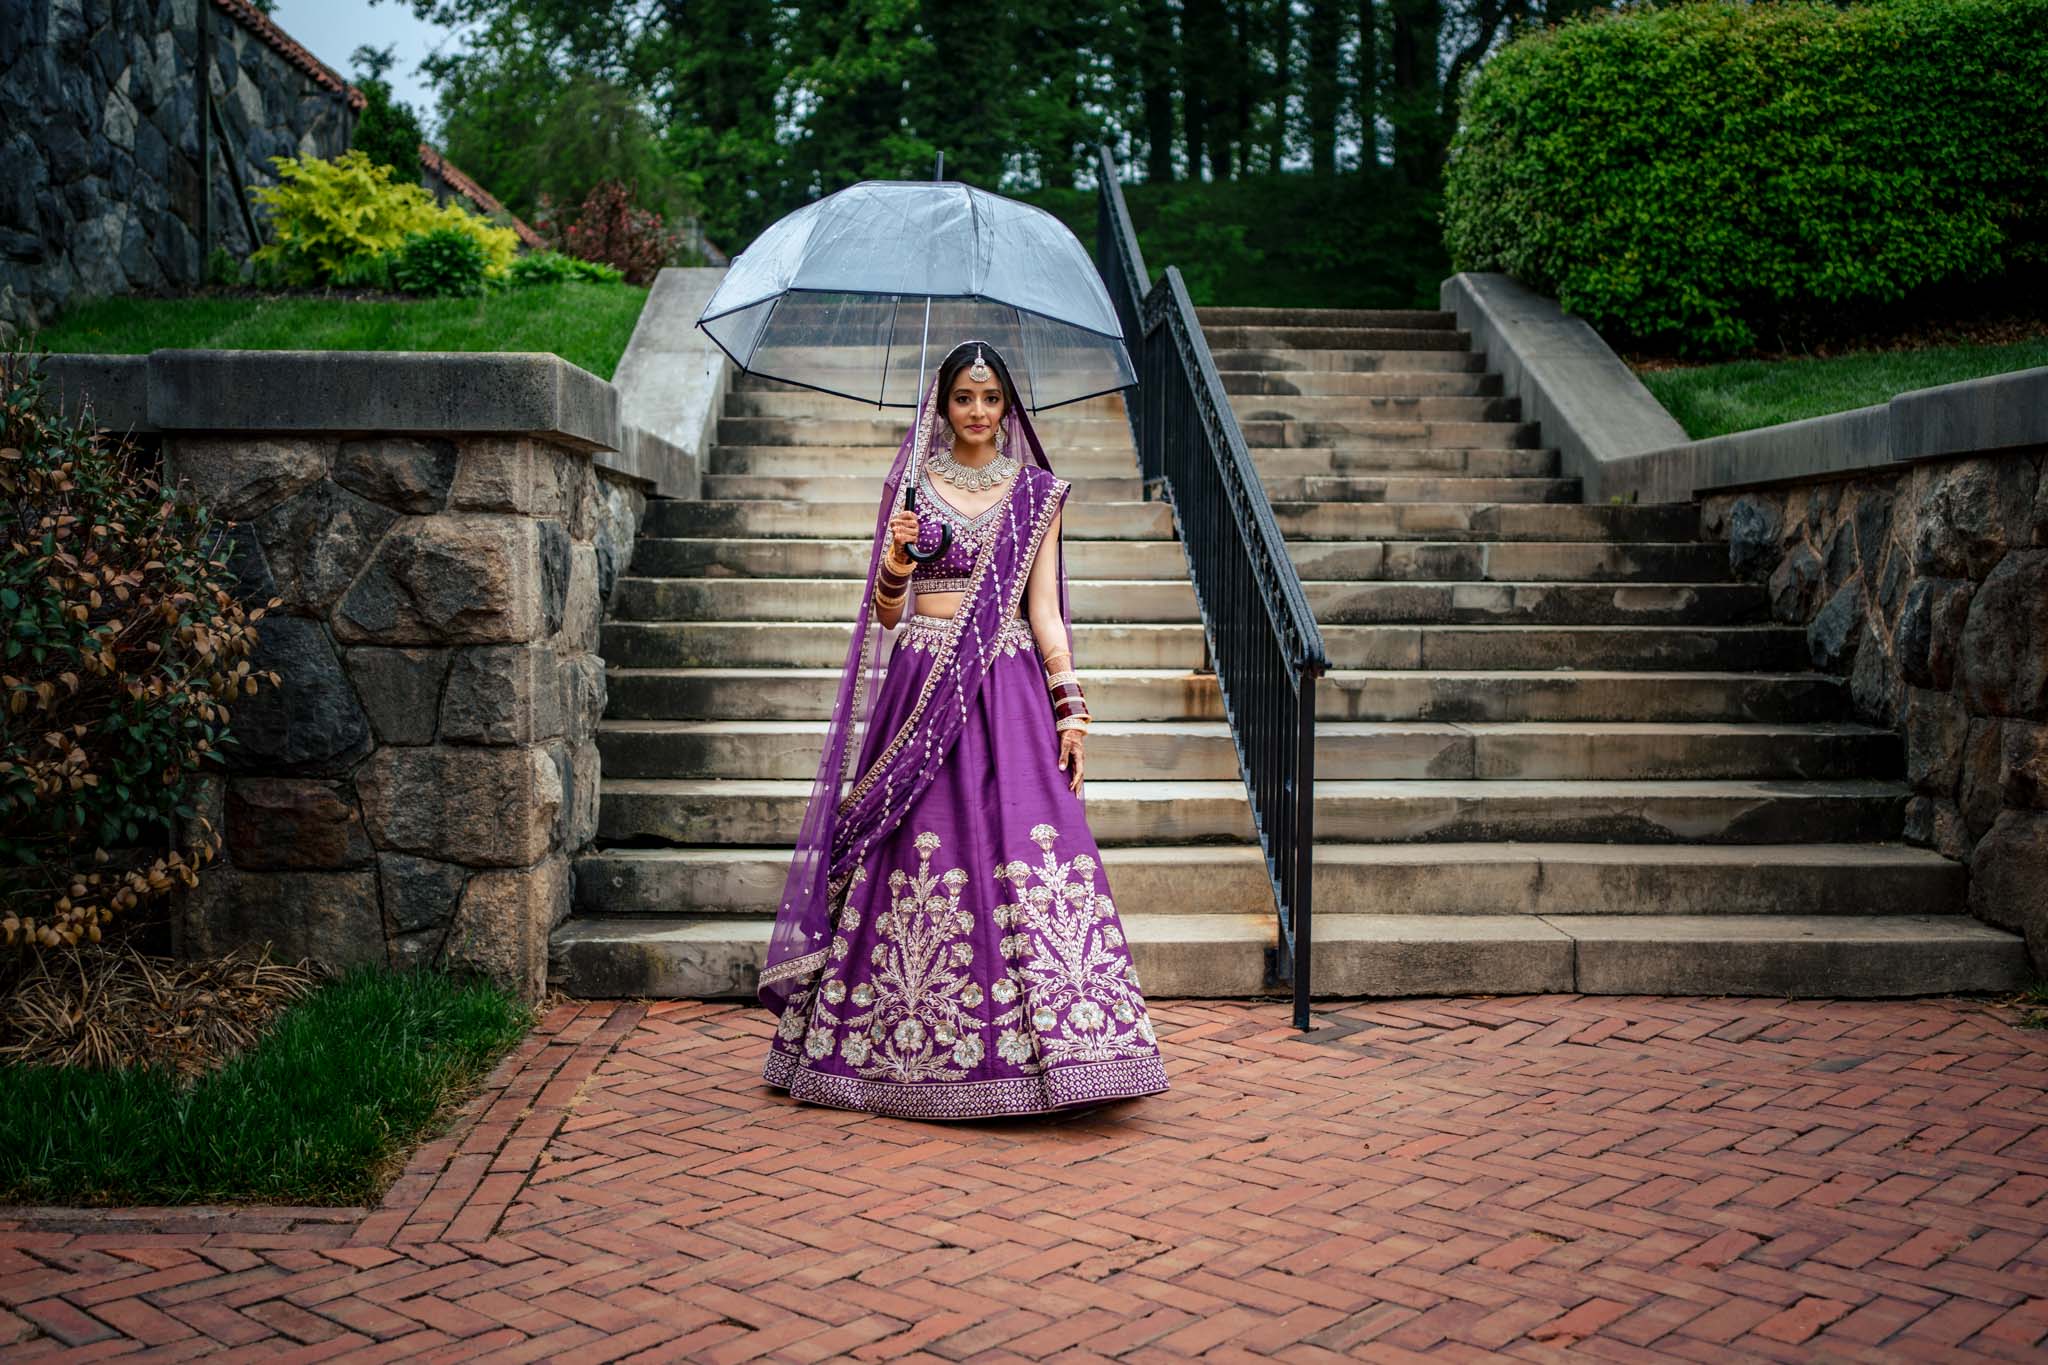 A Biltmore Estate wedding with an Indian bride holding an umbrella.